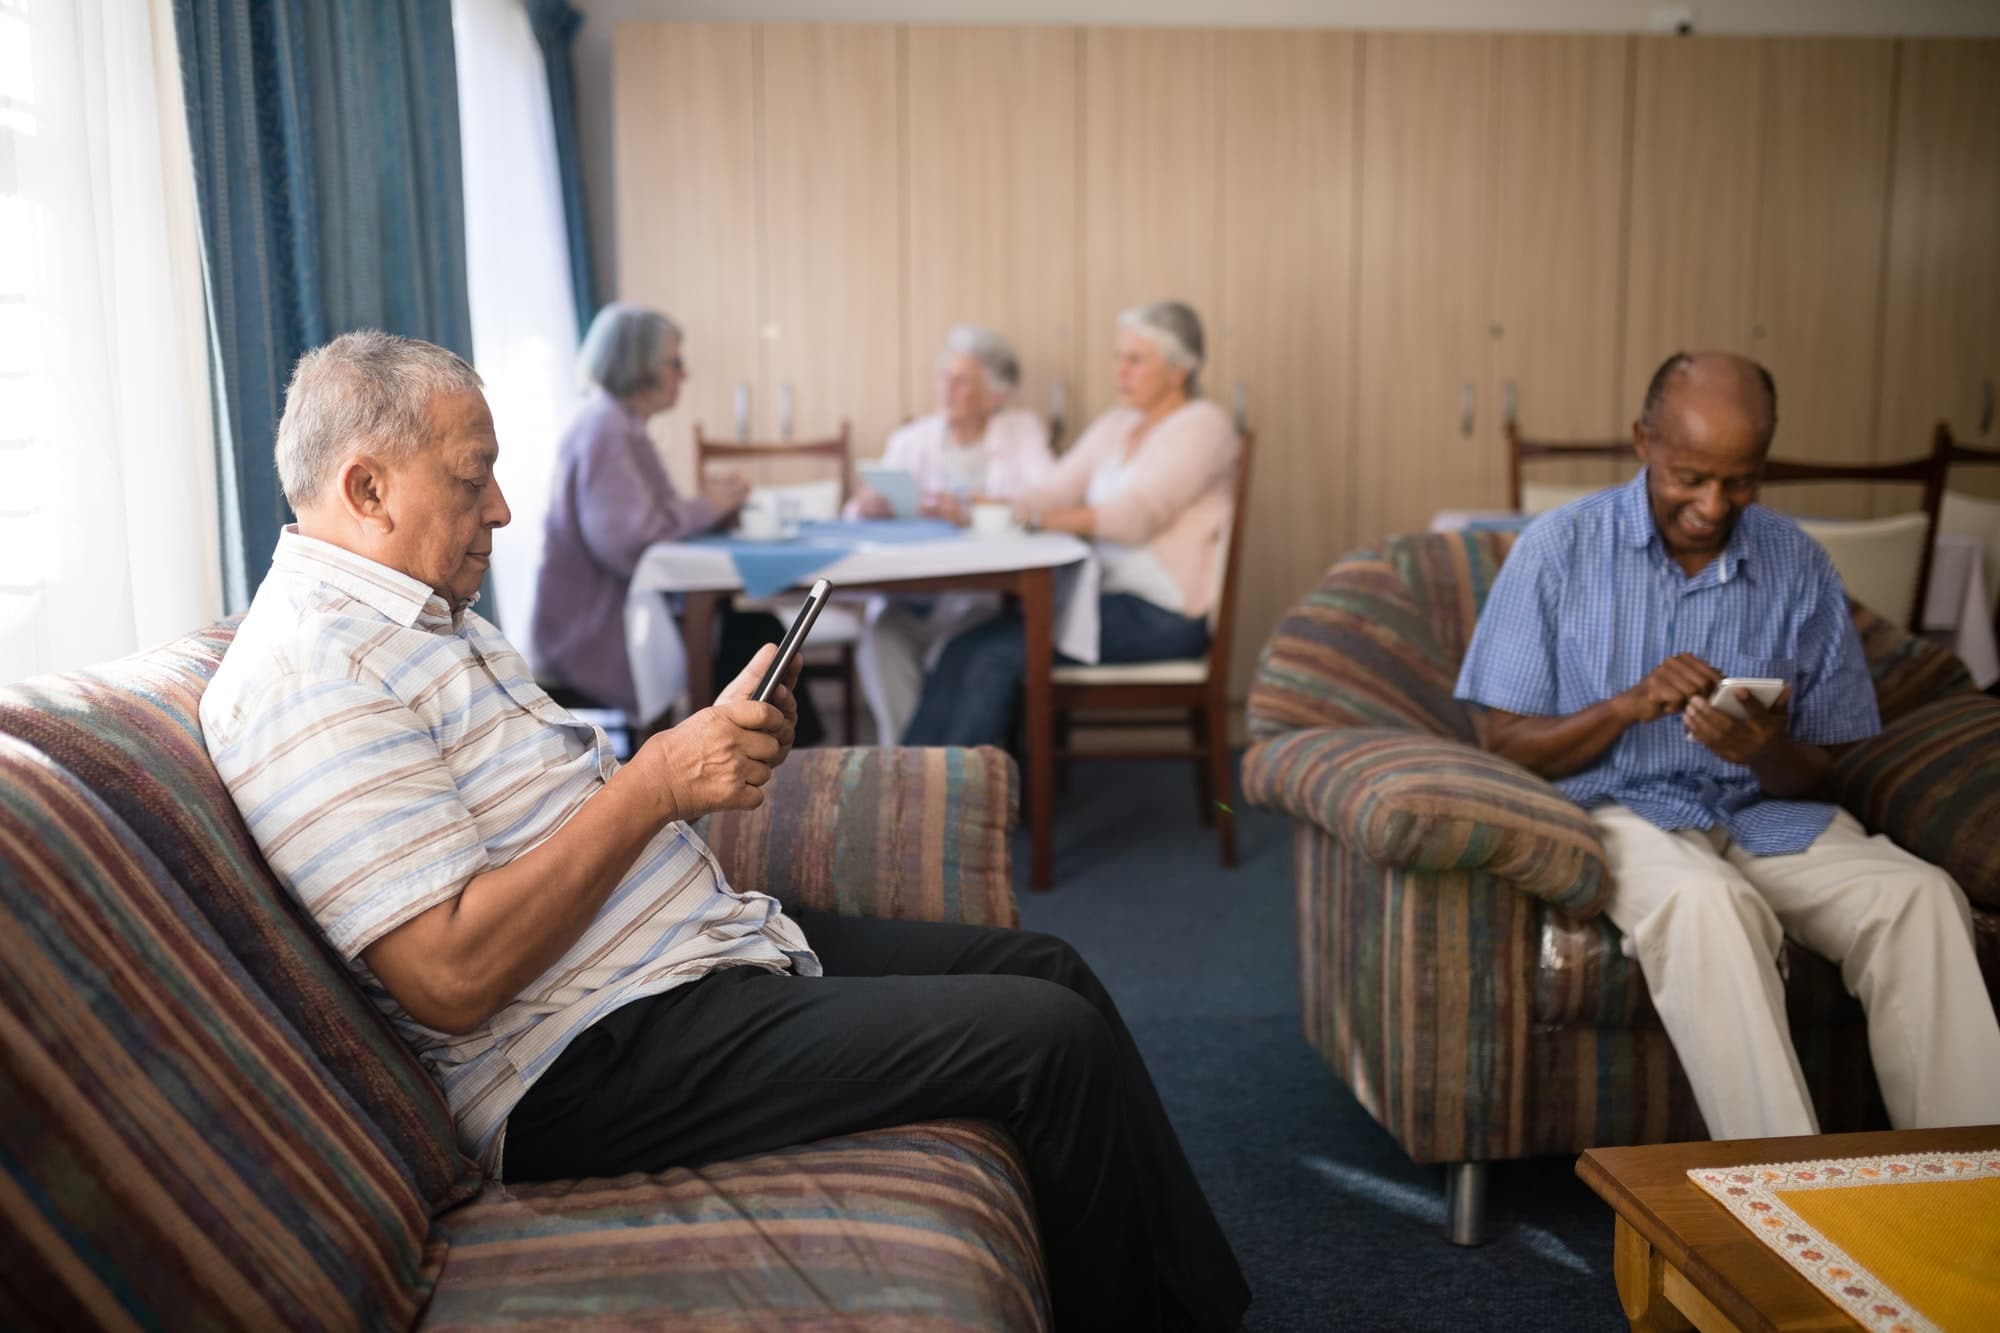 Senior men using mobile phone at nursing home